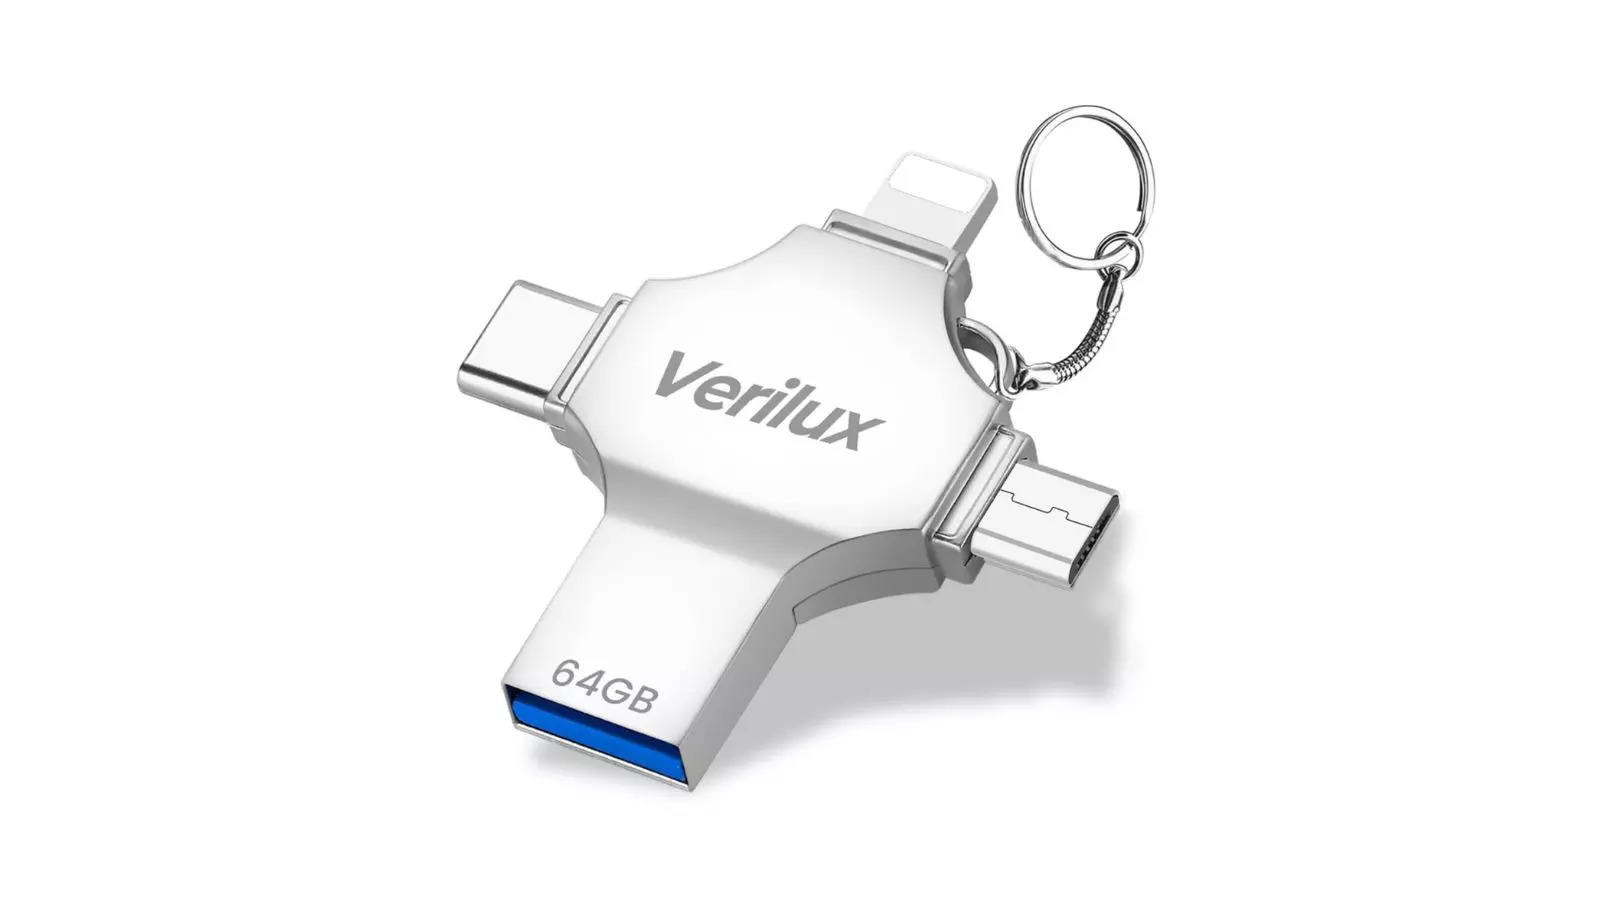 Verilux Flash Drive 64GB